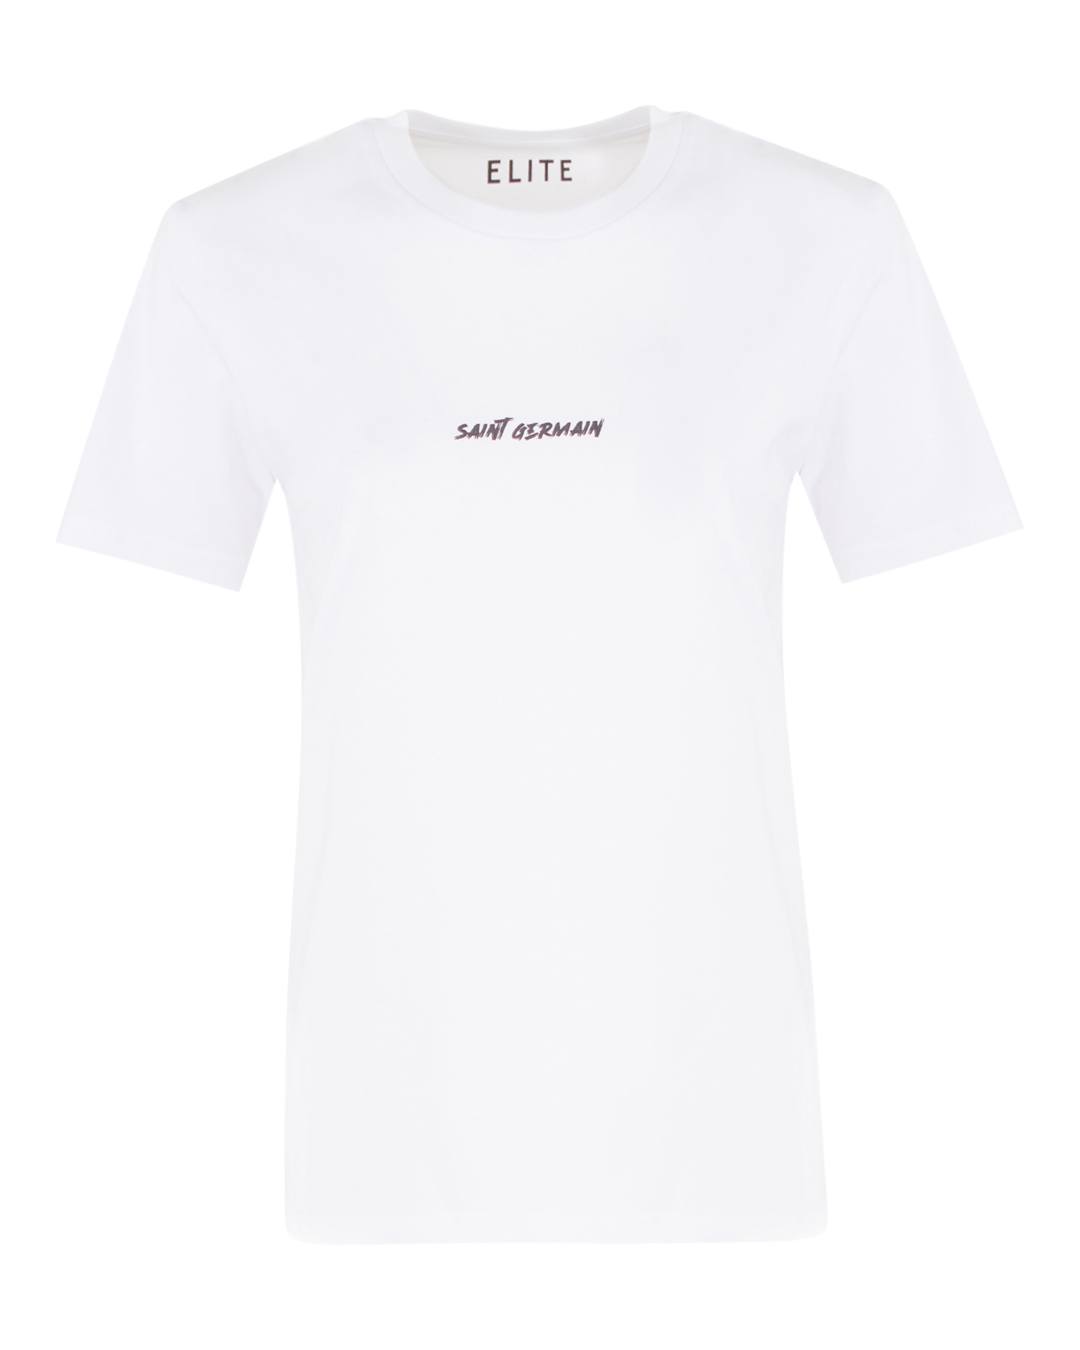 футболка Elite UTE 474 SAINT GERMAIN белый l, размер l